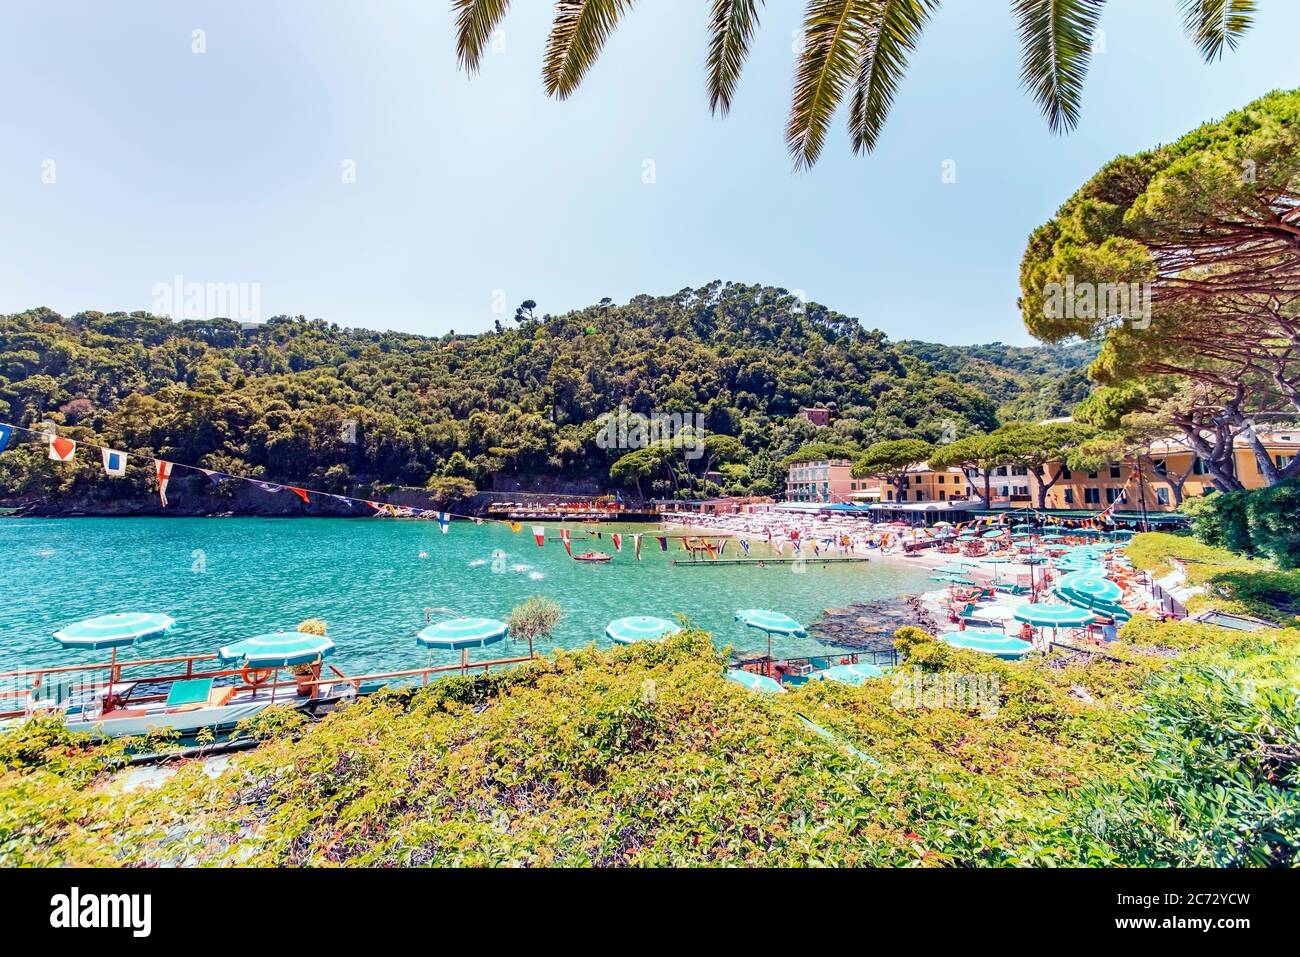 Strand Von Bagni Fiore Sas In Portofino Italien Stockfotografie Alamy